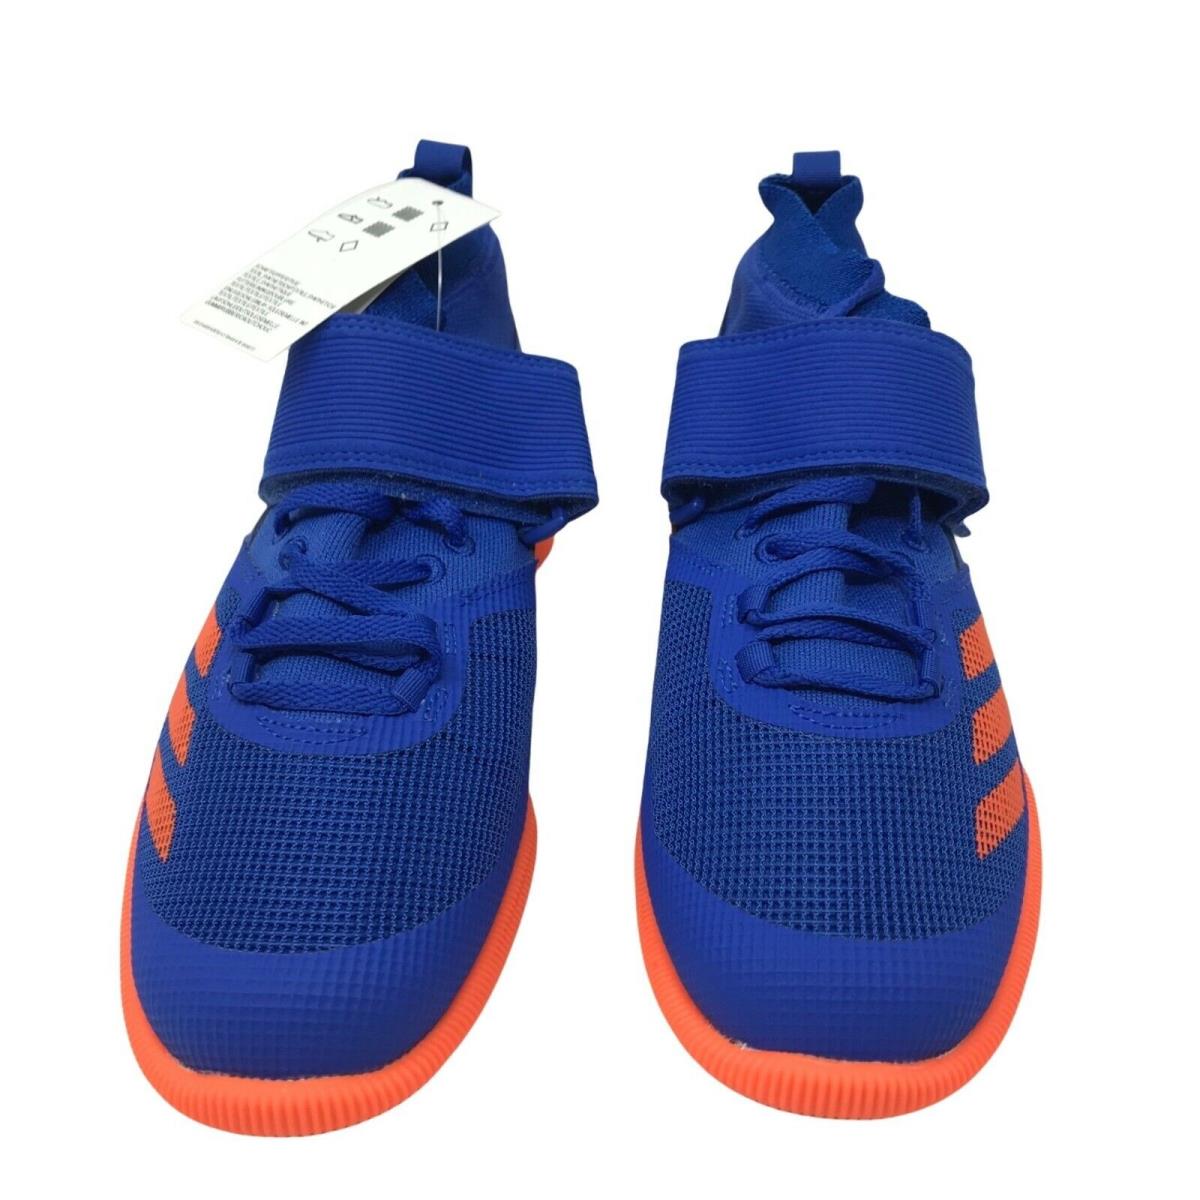 Adidas Men`s Crazy Power Cross Trainer Size 6.5 - Blue/Orange